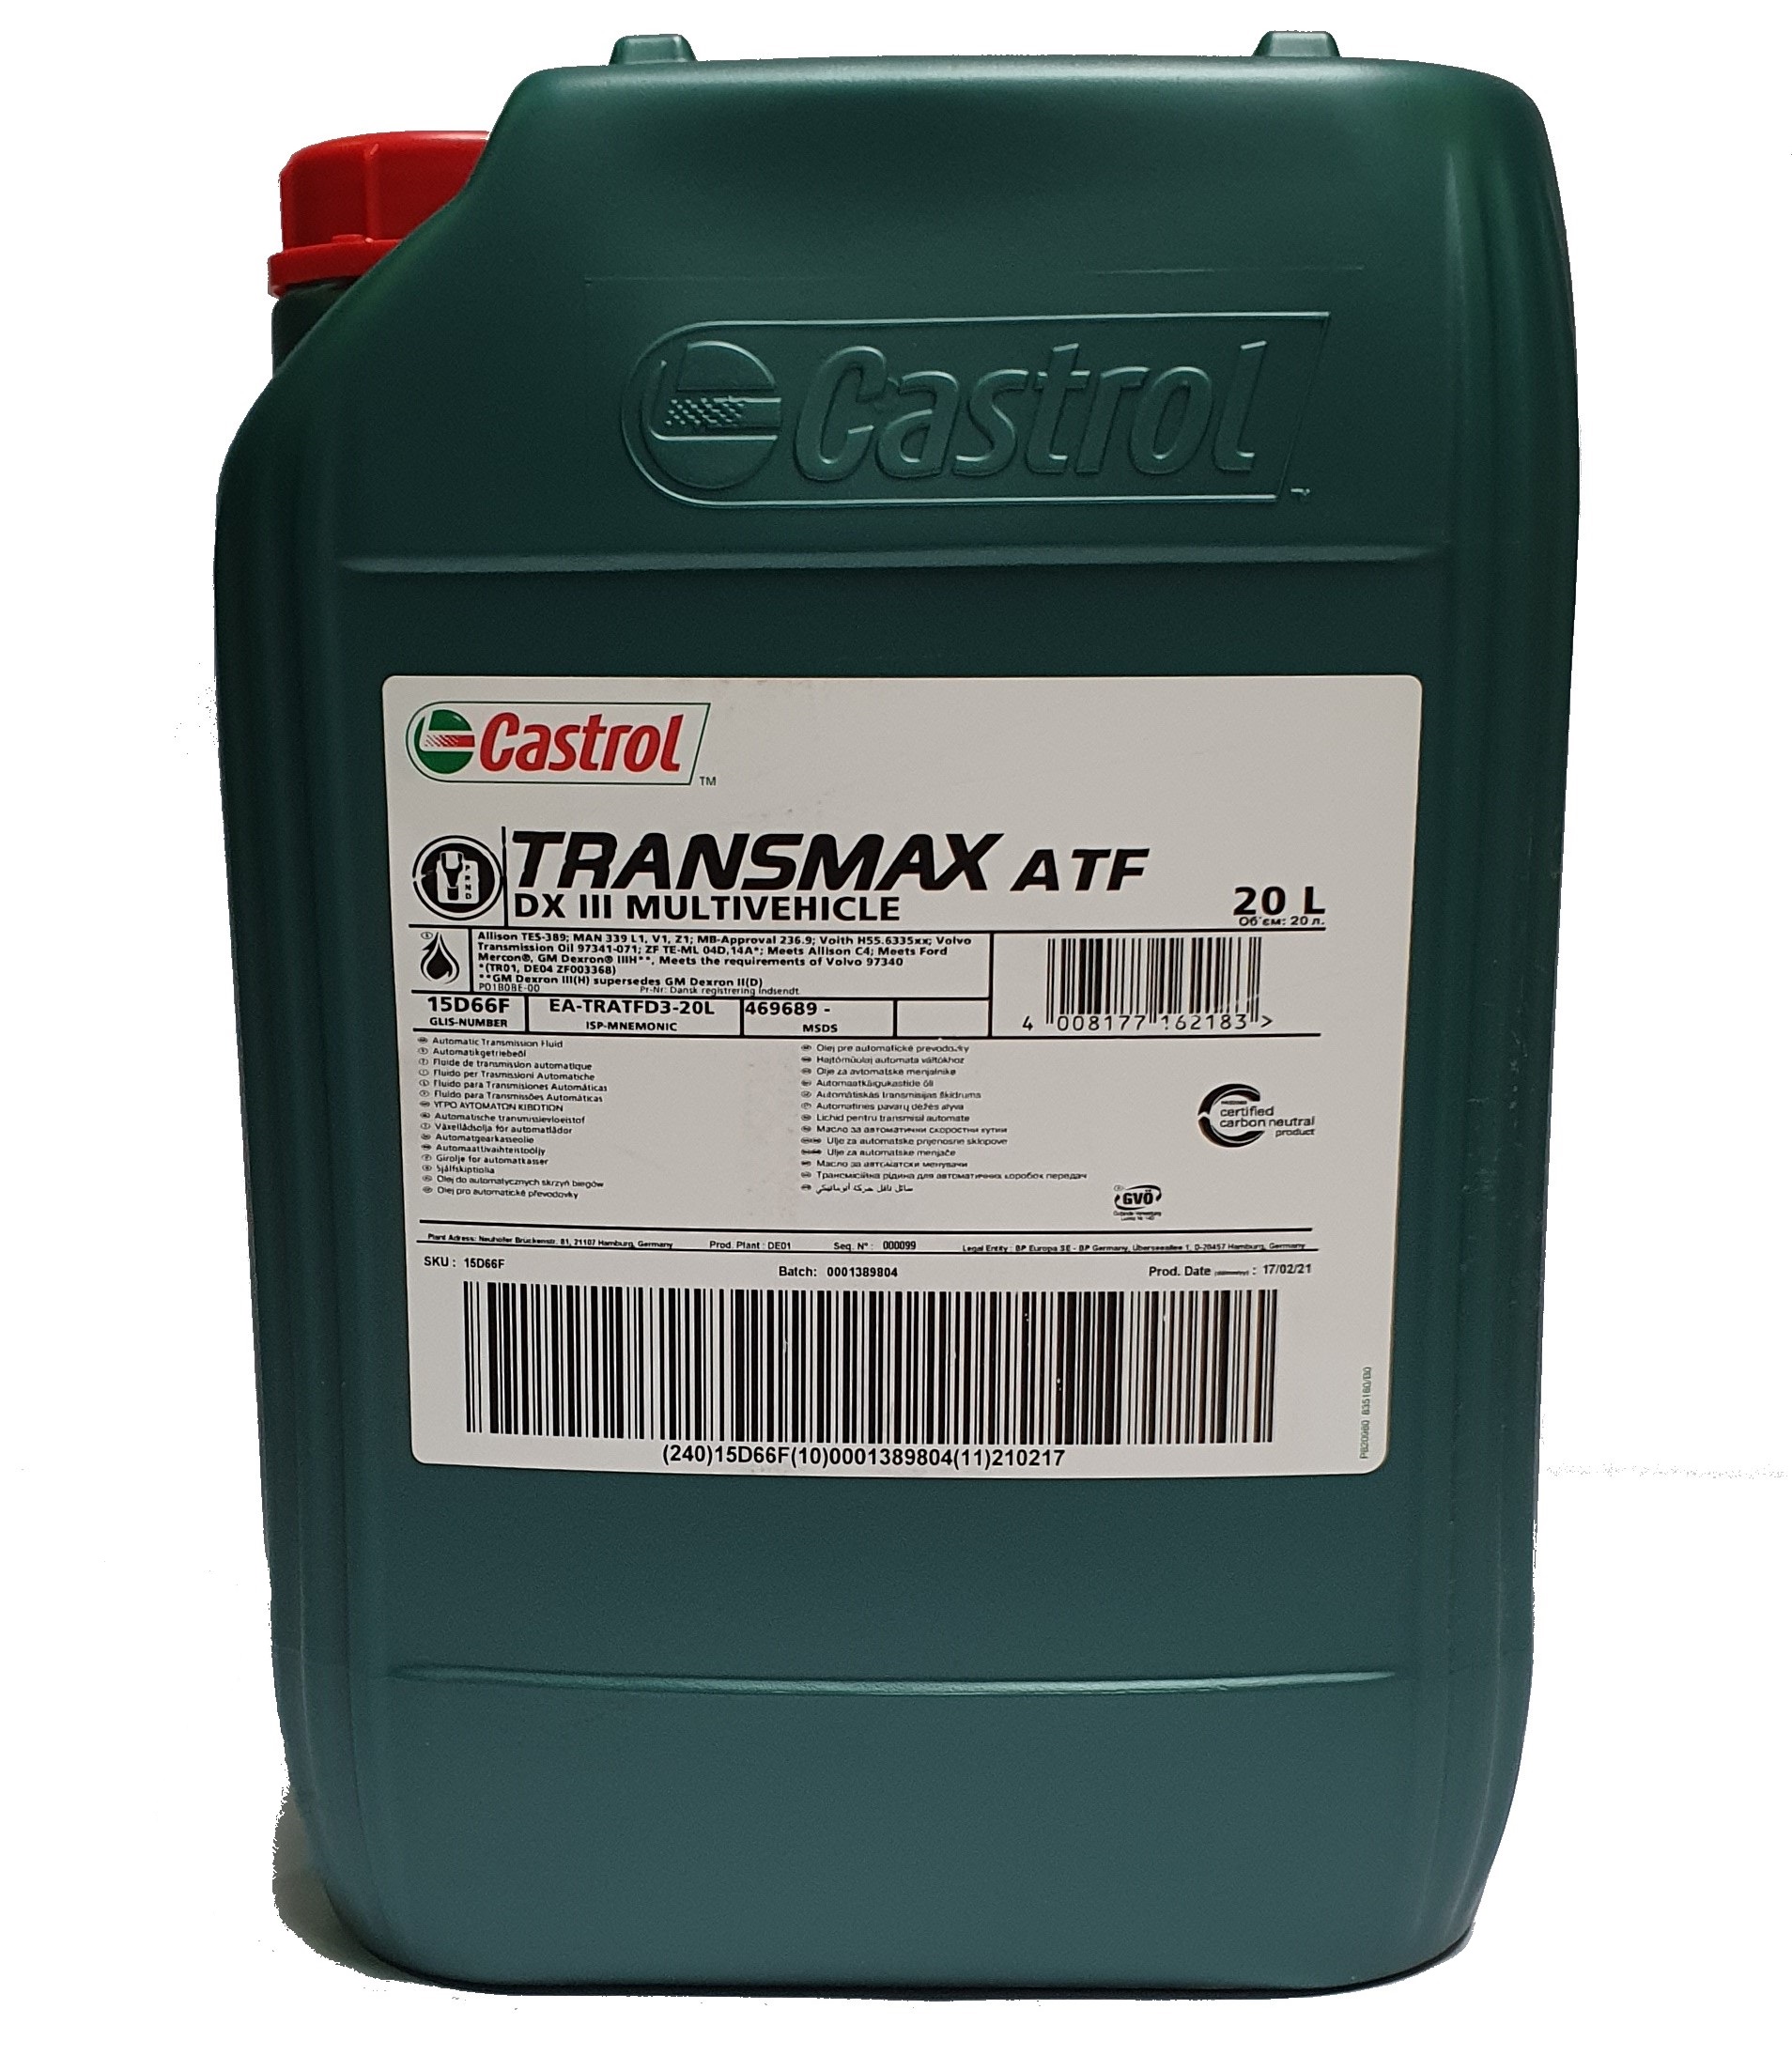 Castrol Transmax ATF DX III Multivehicle 20 Liter